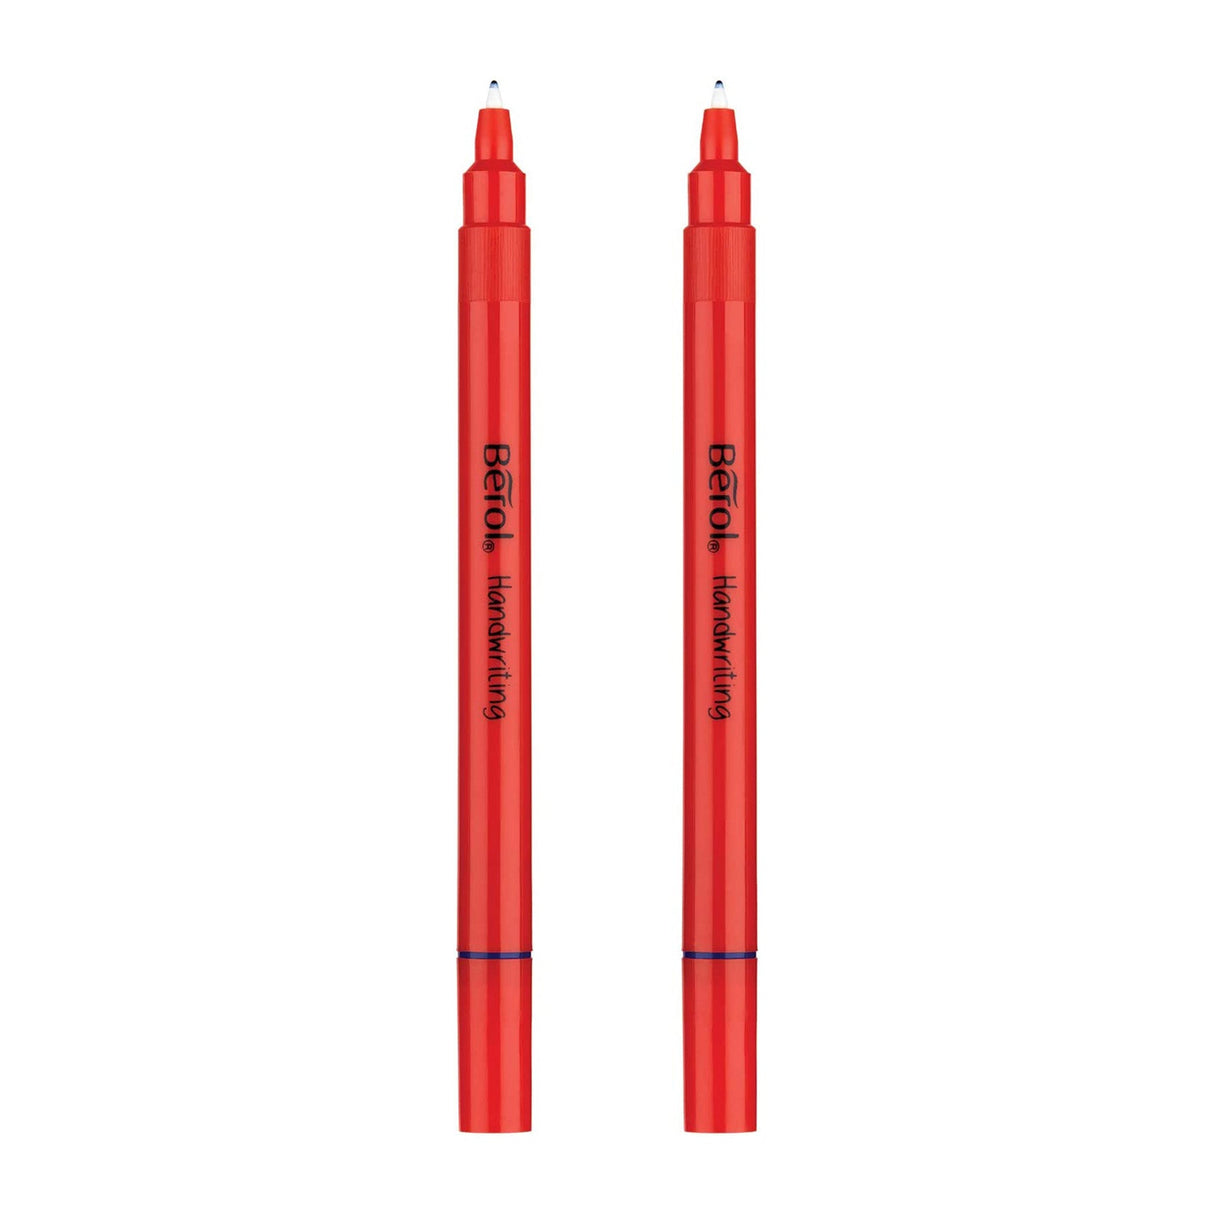 Berol Medium Nib Handwriting Pen - Blue Ink - Pack of 2 | Stationery Shop UK